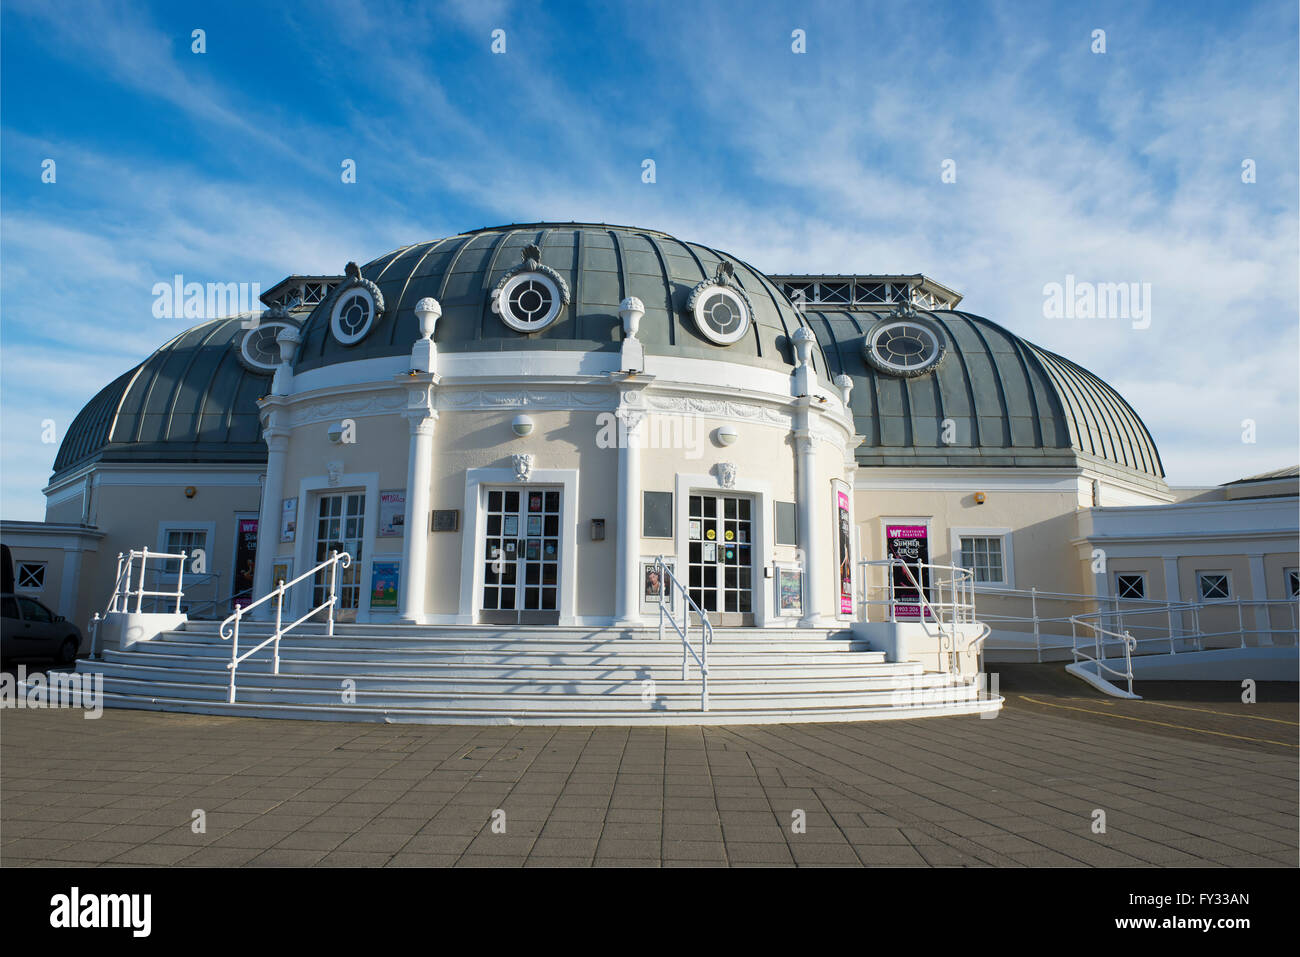 El teatro Pavilion, muelle de Worthing, Worthing, West Sussex, UK Foto de stock